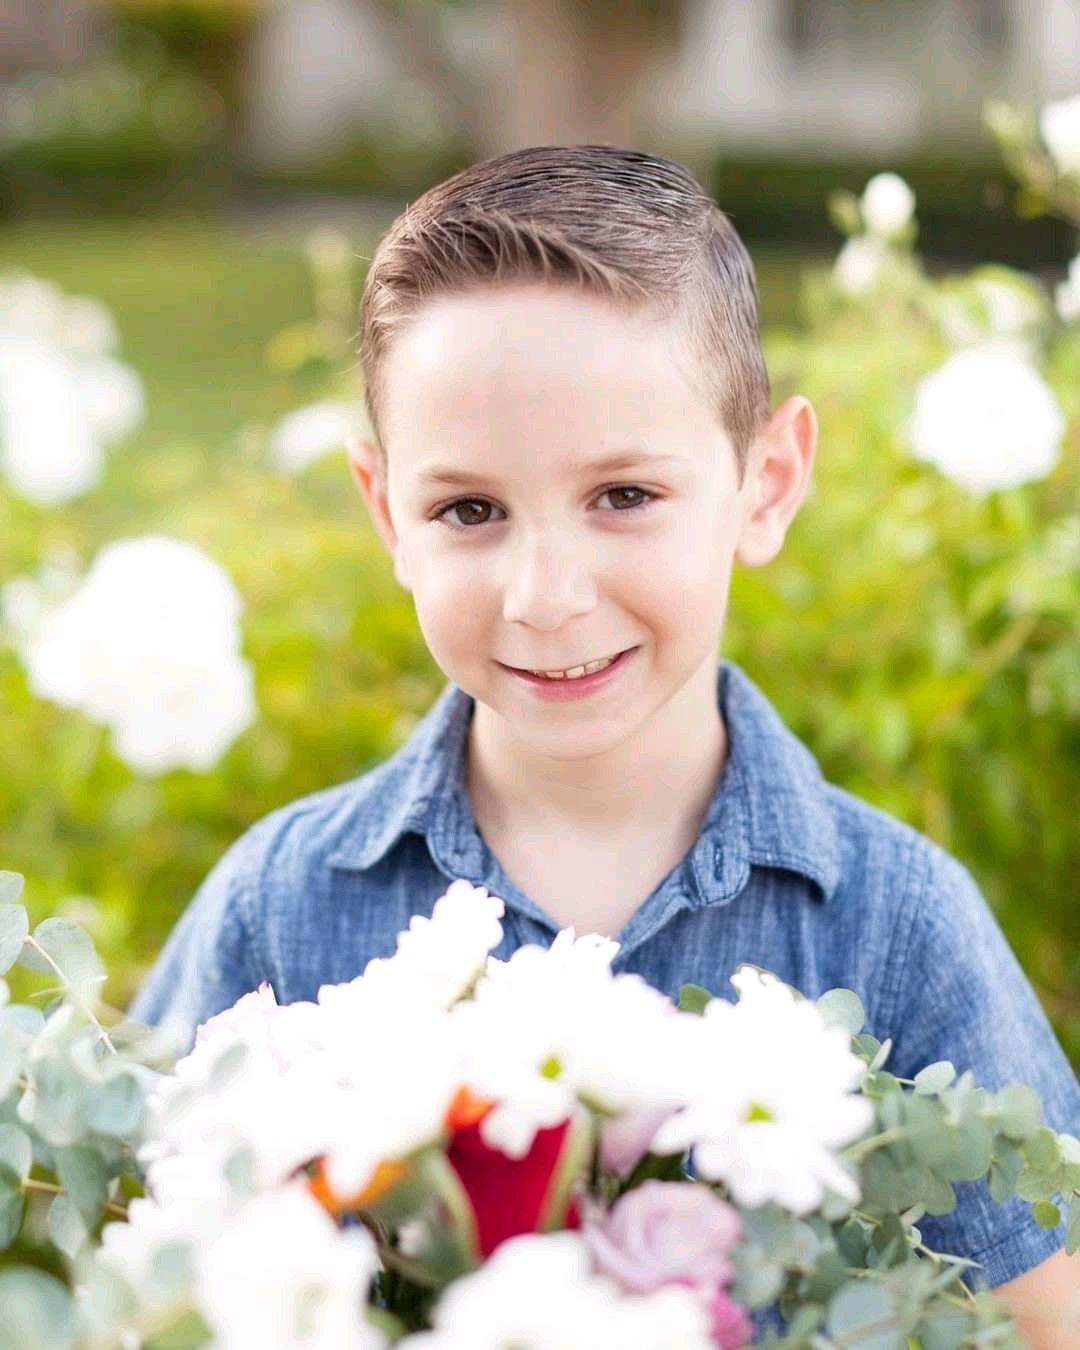 María Cedeño on LinkedIn: Our beloved son Bradley is now in heaven. We ...